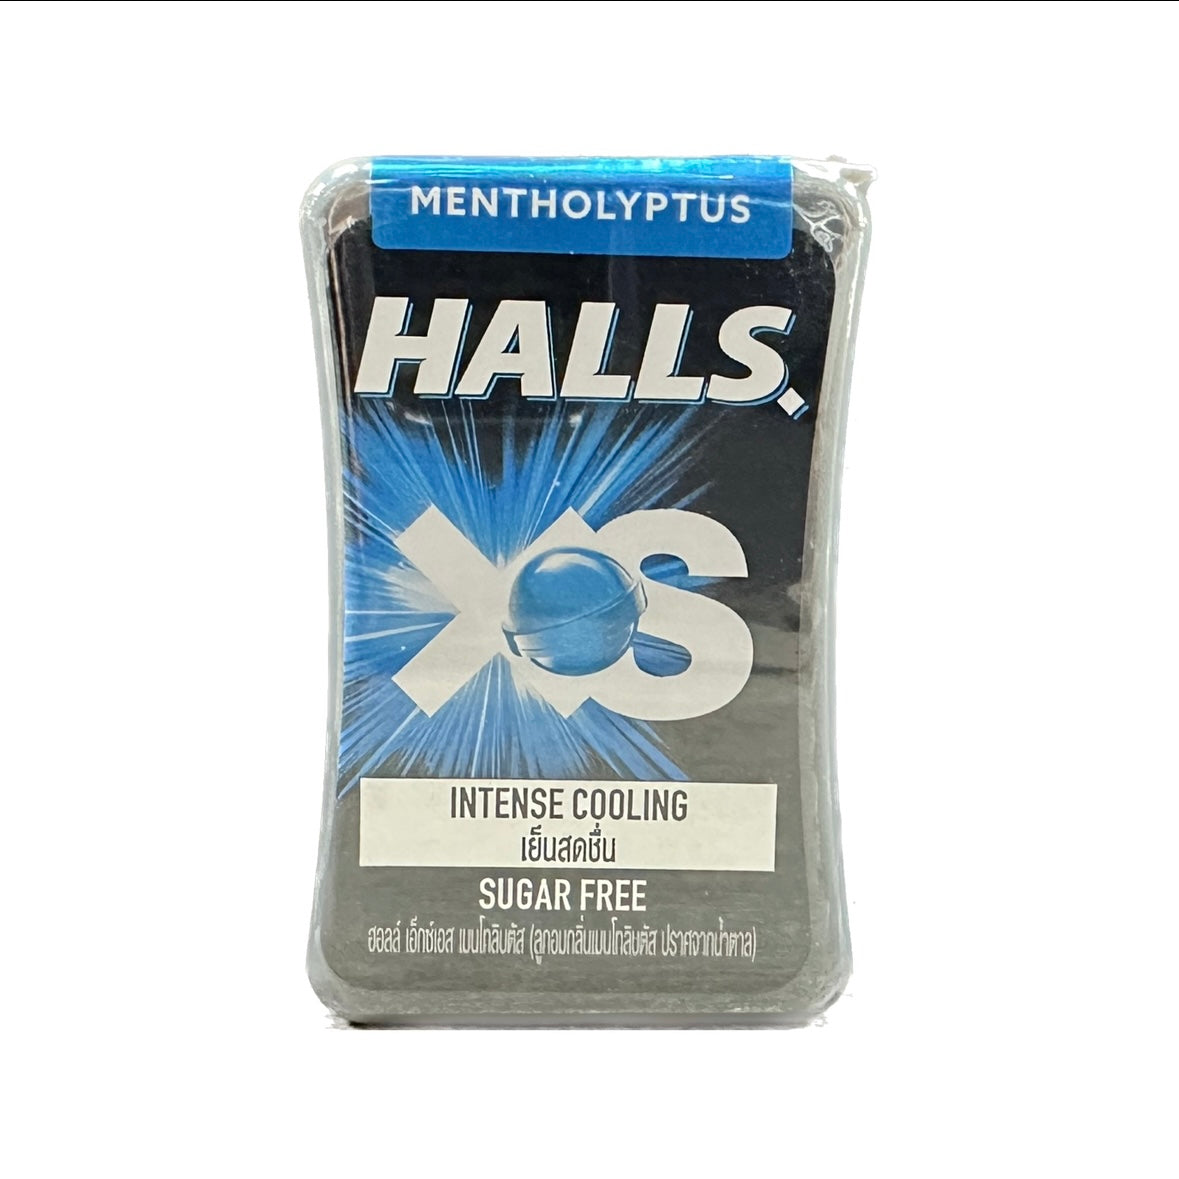 Halls Mentholptus